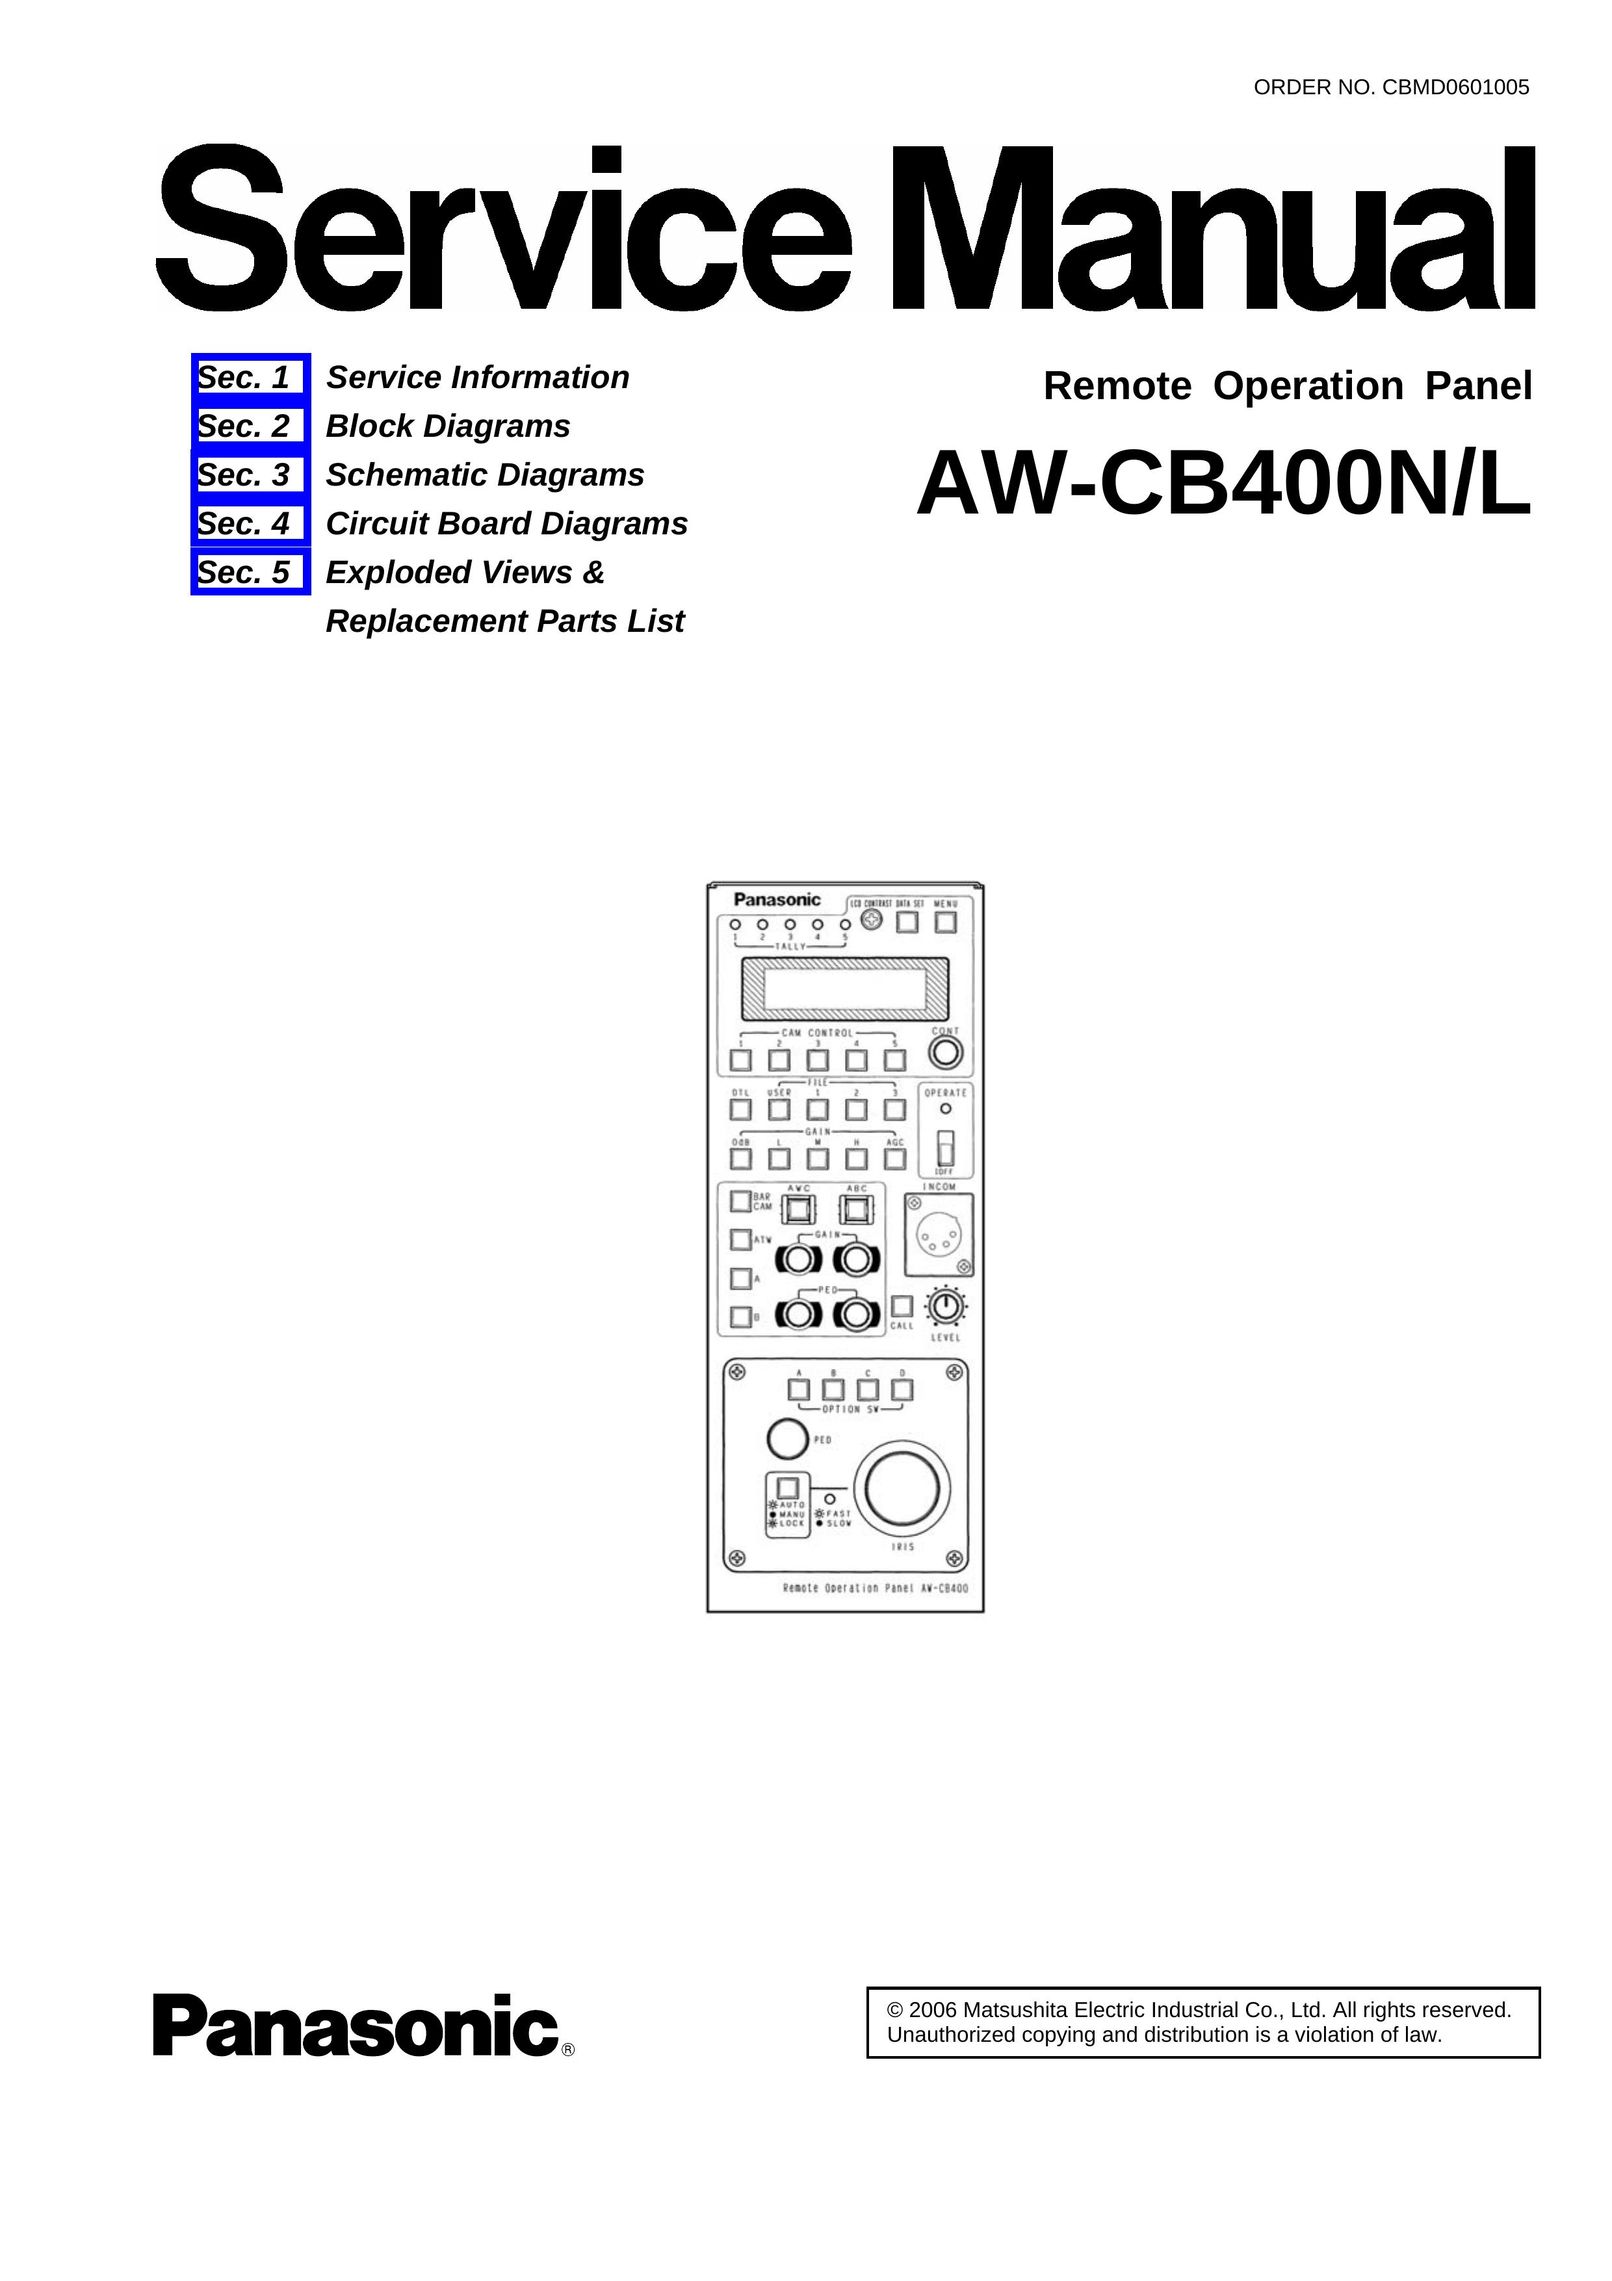 Panasonic AW-CB400L Universal Remote User Manual